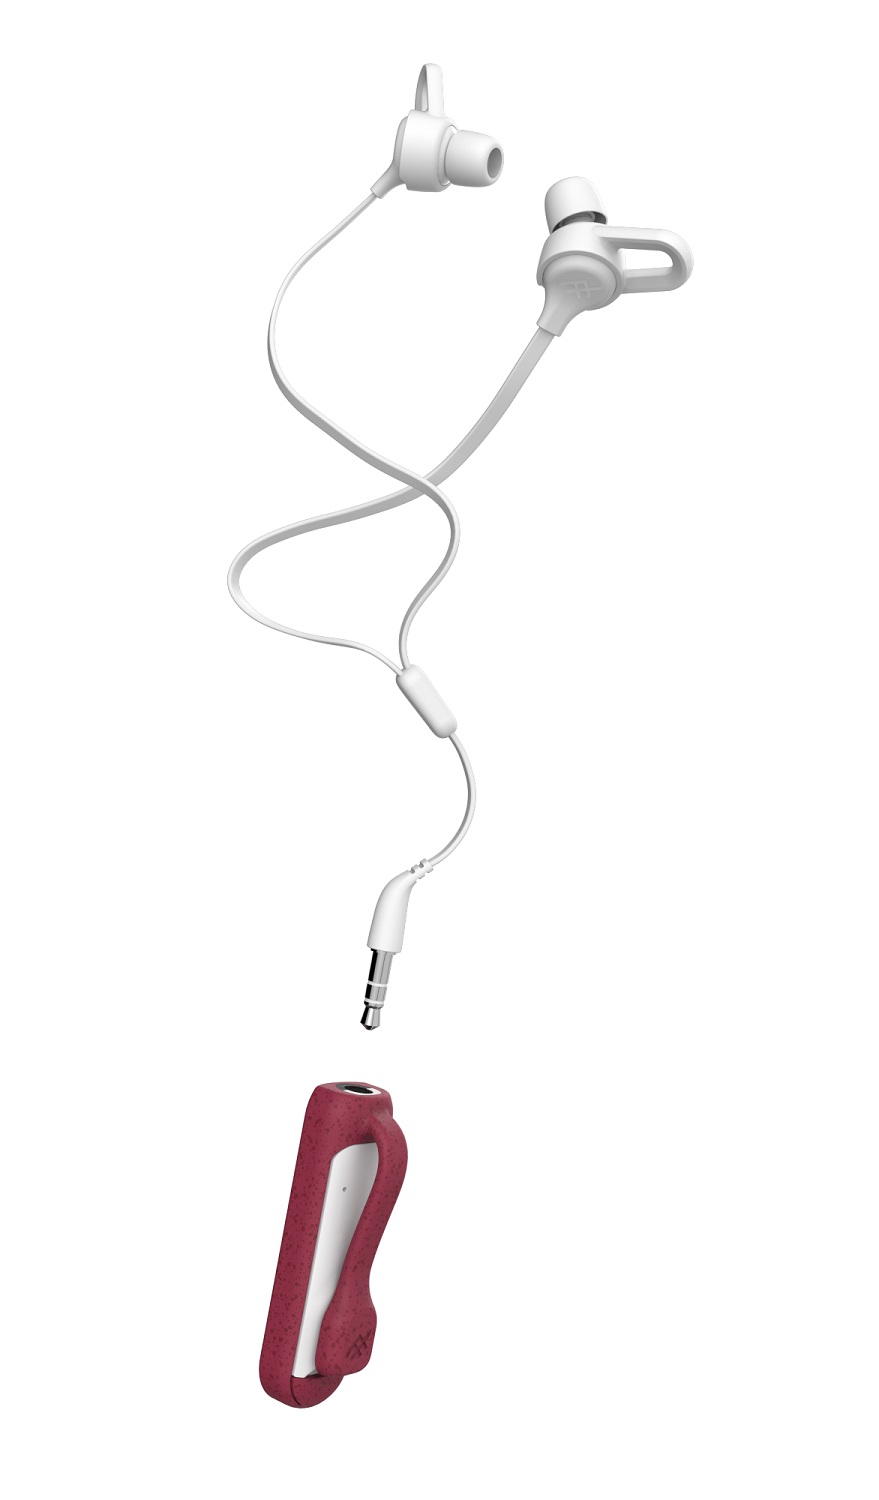 iFrogz - Audiífonos con Earbuds Hub Wireless Bluetooth - Blanco